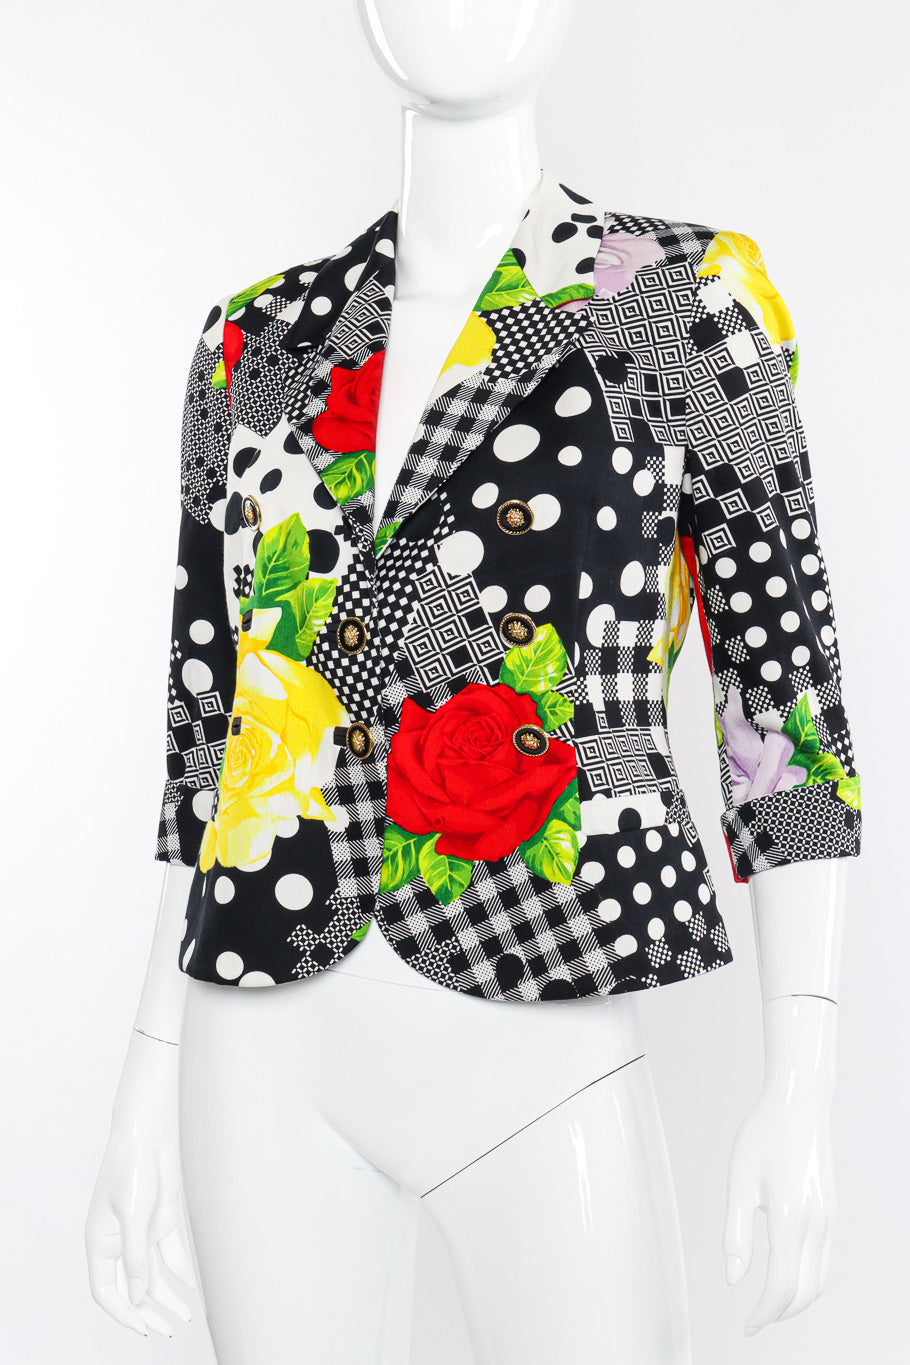 Vintage Versus Versace Floral Checkered Print Jacket front view on mannequin closeup @Recessla